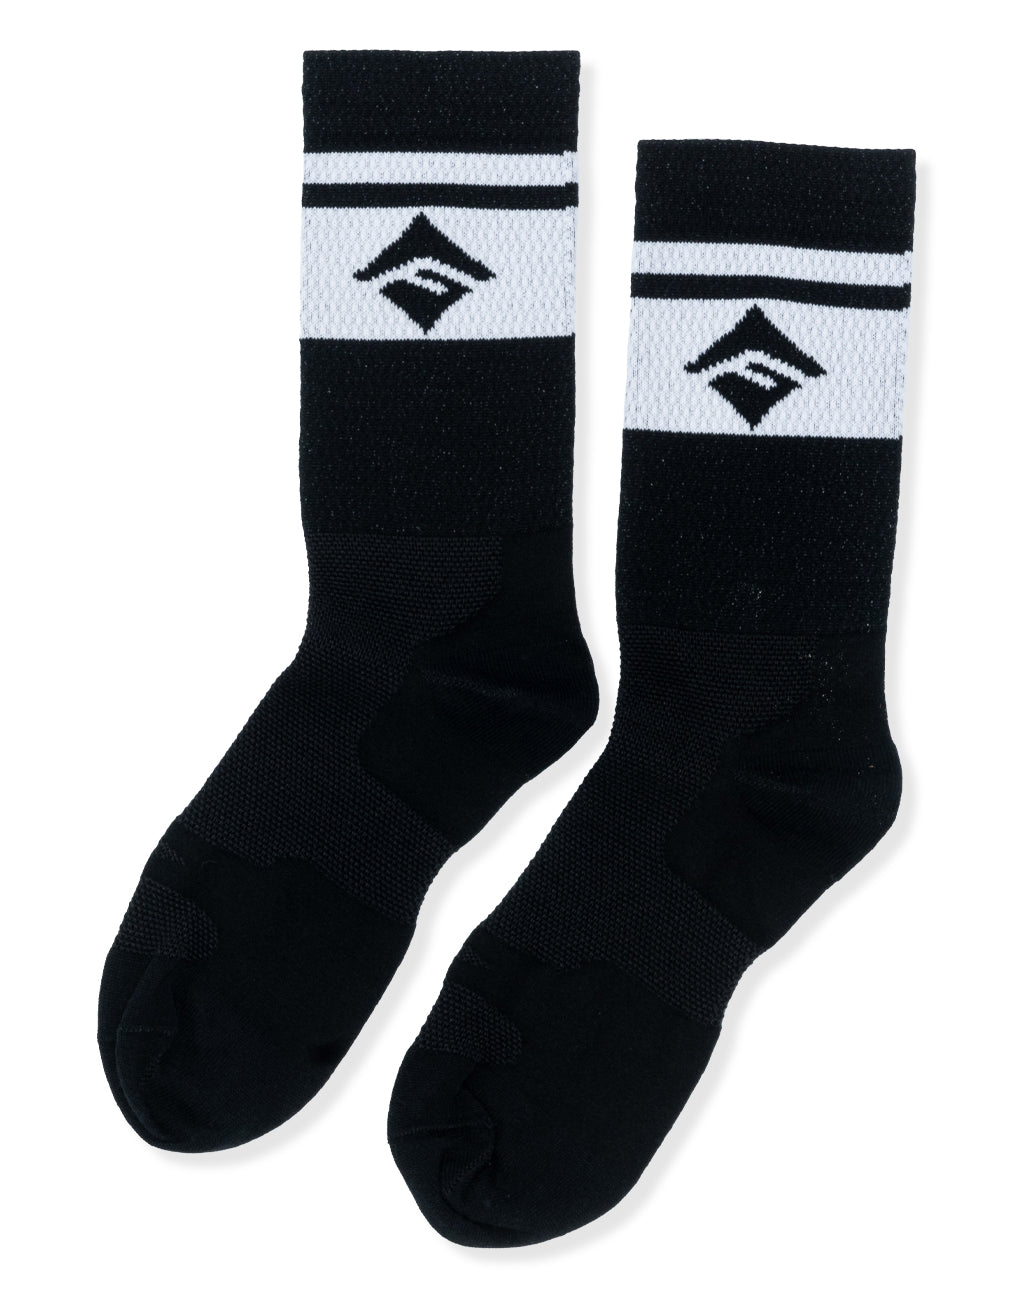 2 Tone - Tall Levitate Sock - Black/White